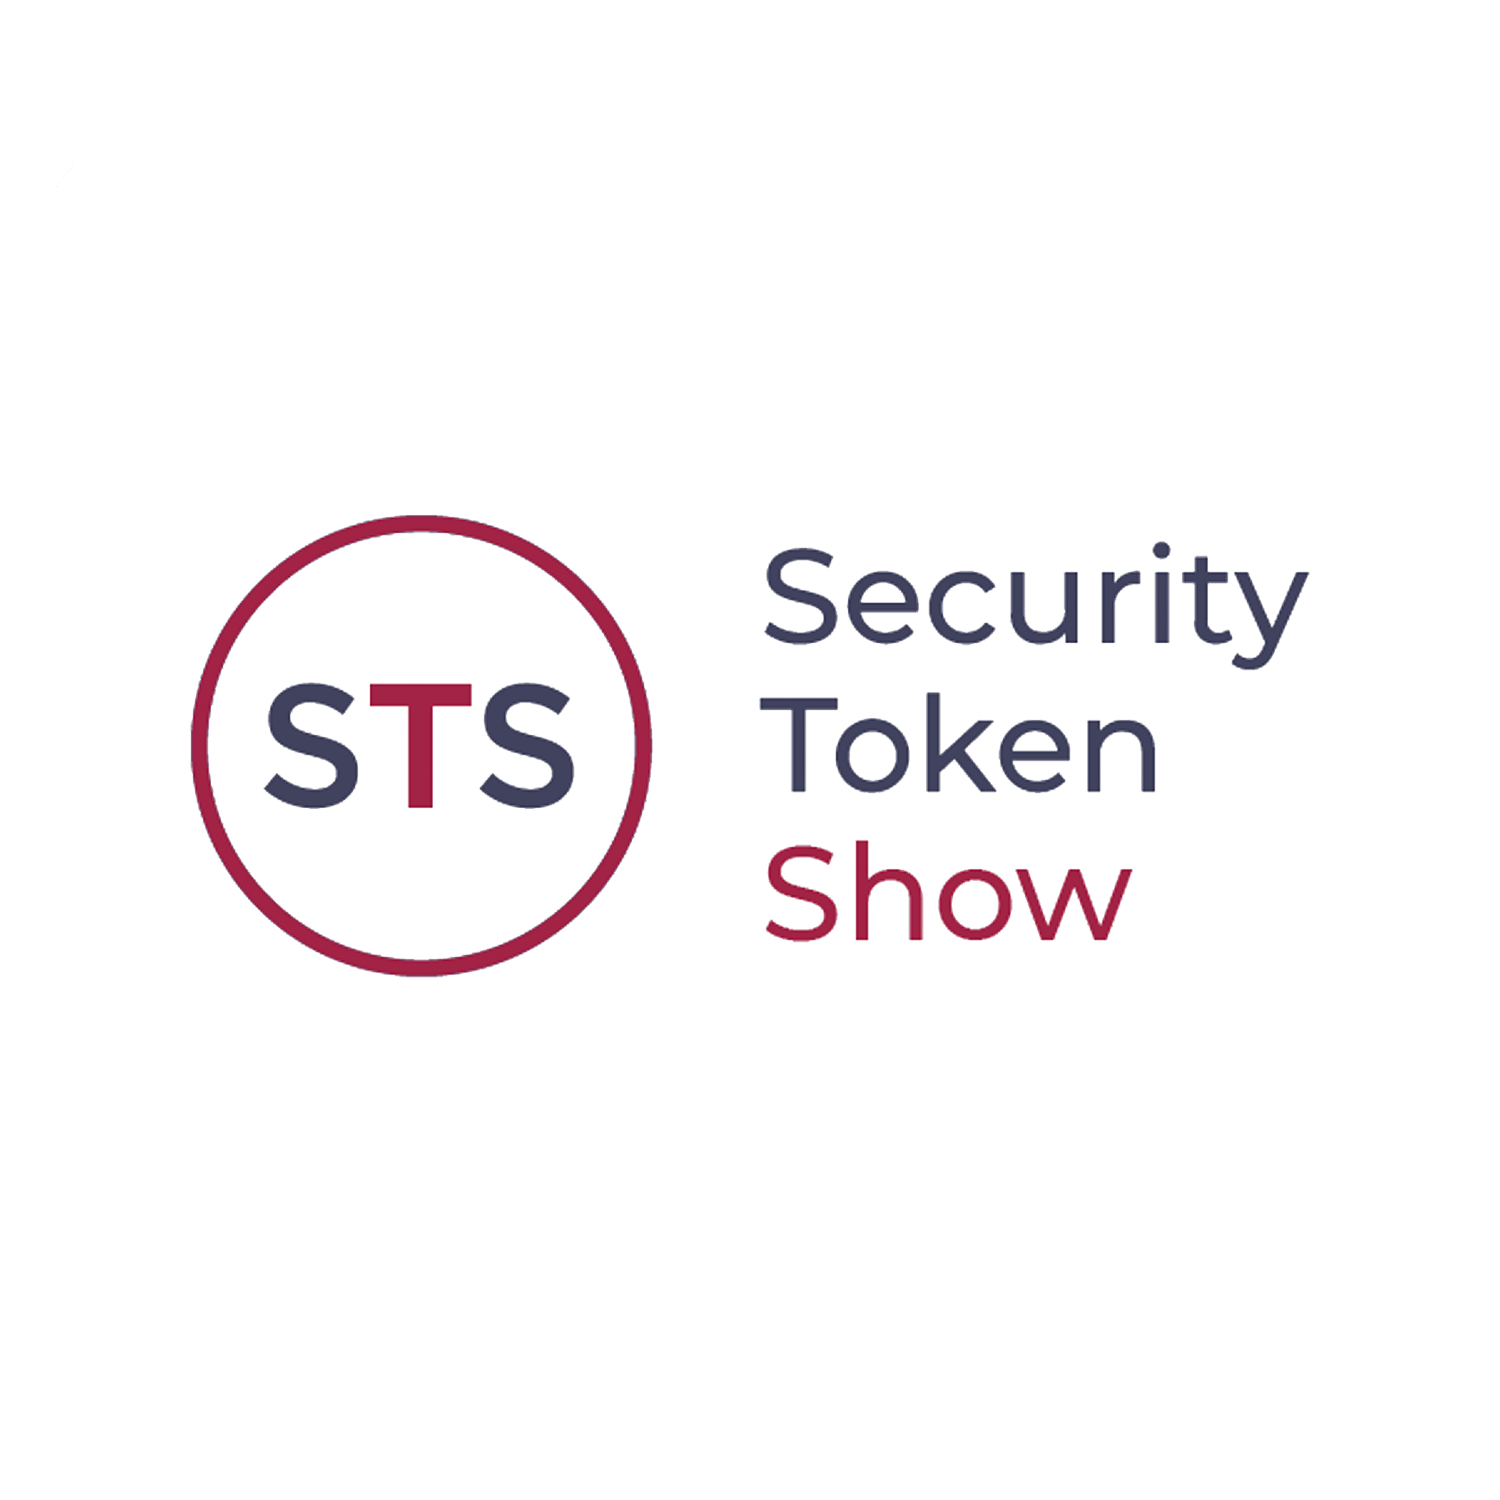 The Security Token Show